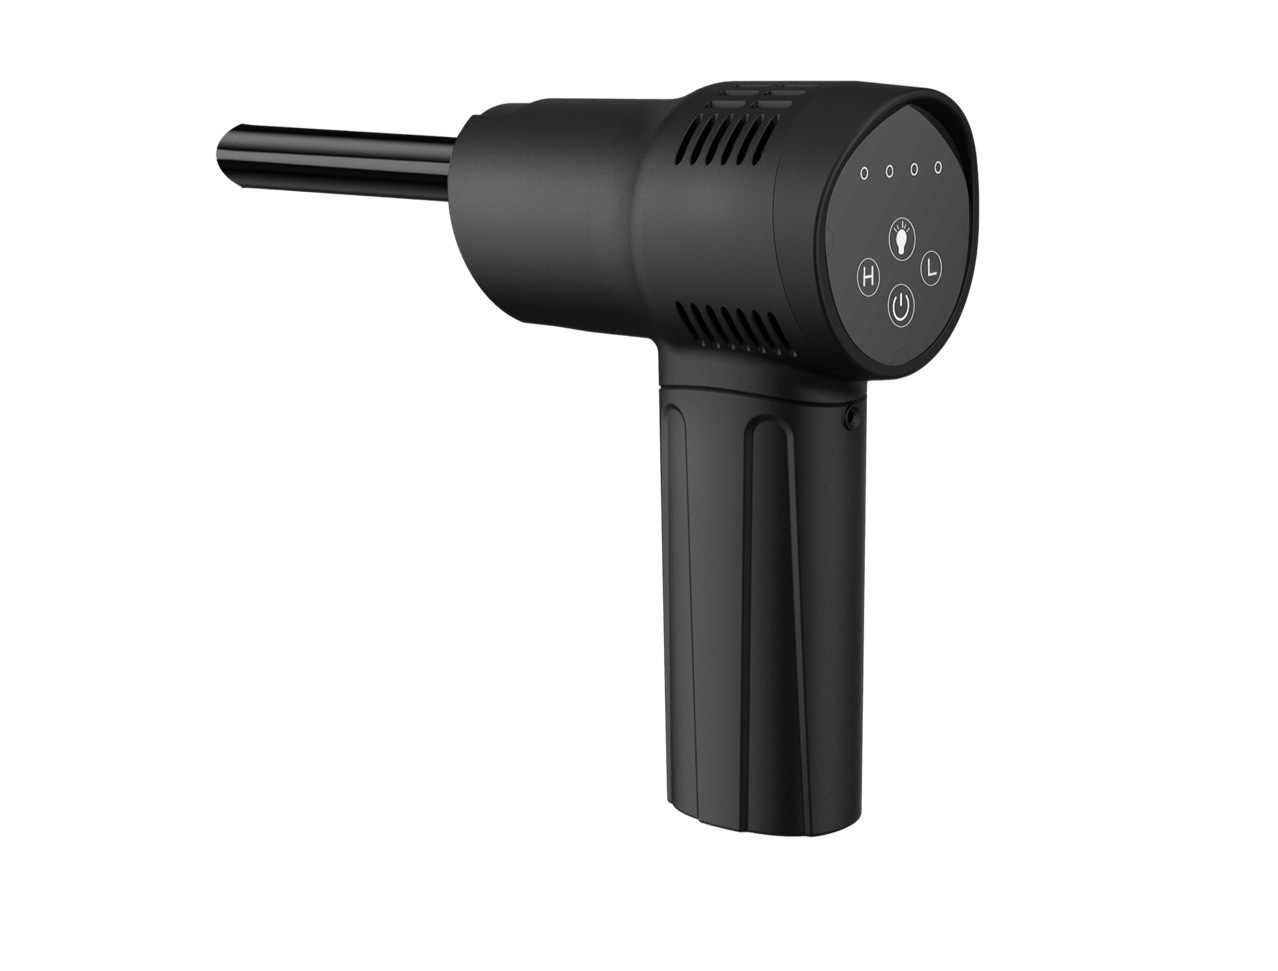 Spot USB Rechargeable Wireless Air Dust Blower High Power Hair Dryer Dust Blower Household Electric Dust Blower